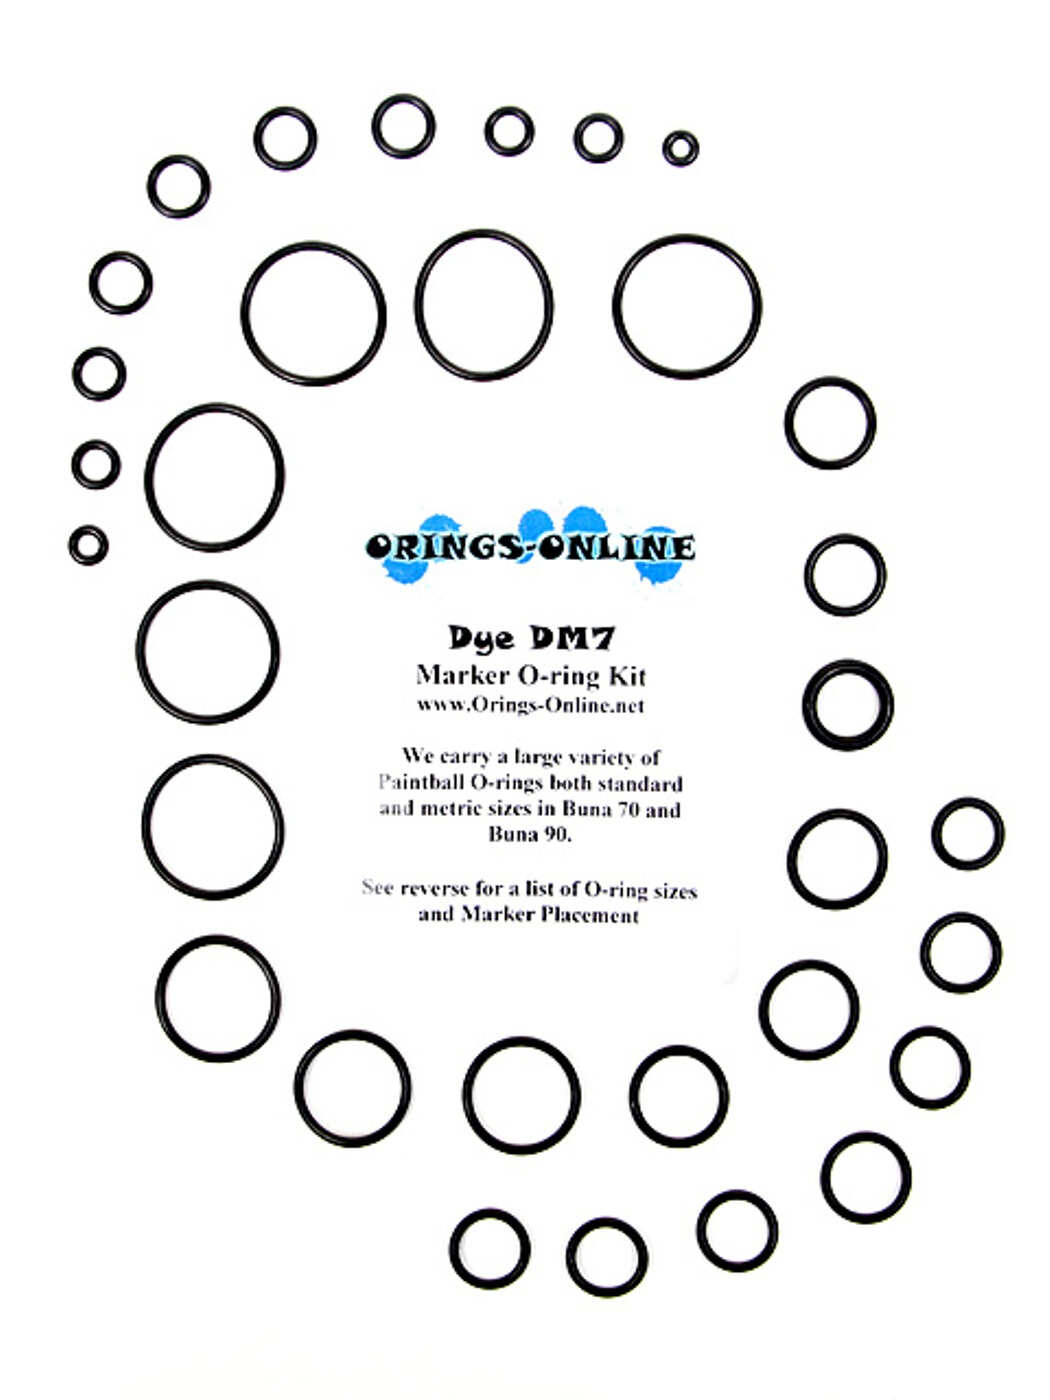 kits Dye 2012 DM Series Paintball Marker O-ring Oring Kit x 4 rebuilds 